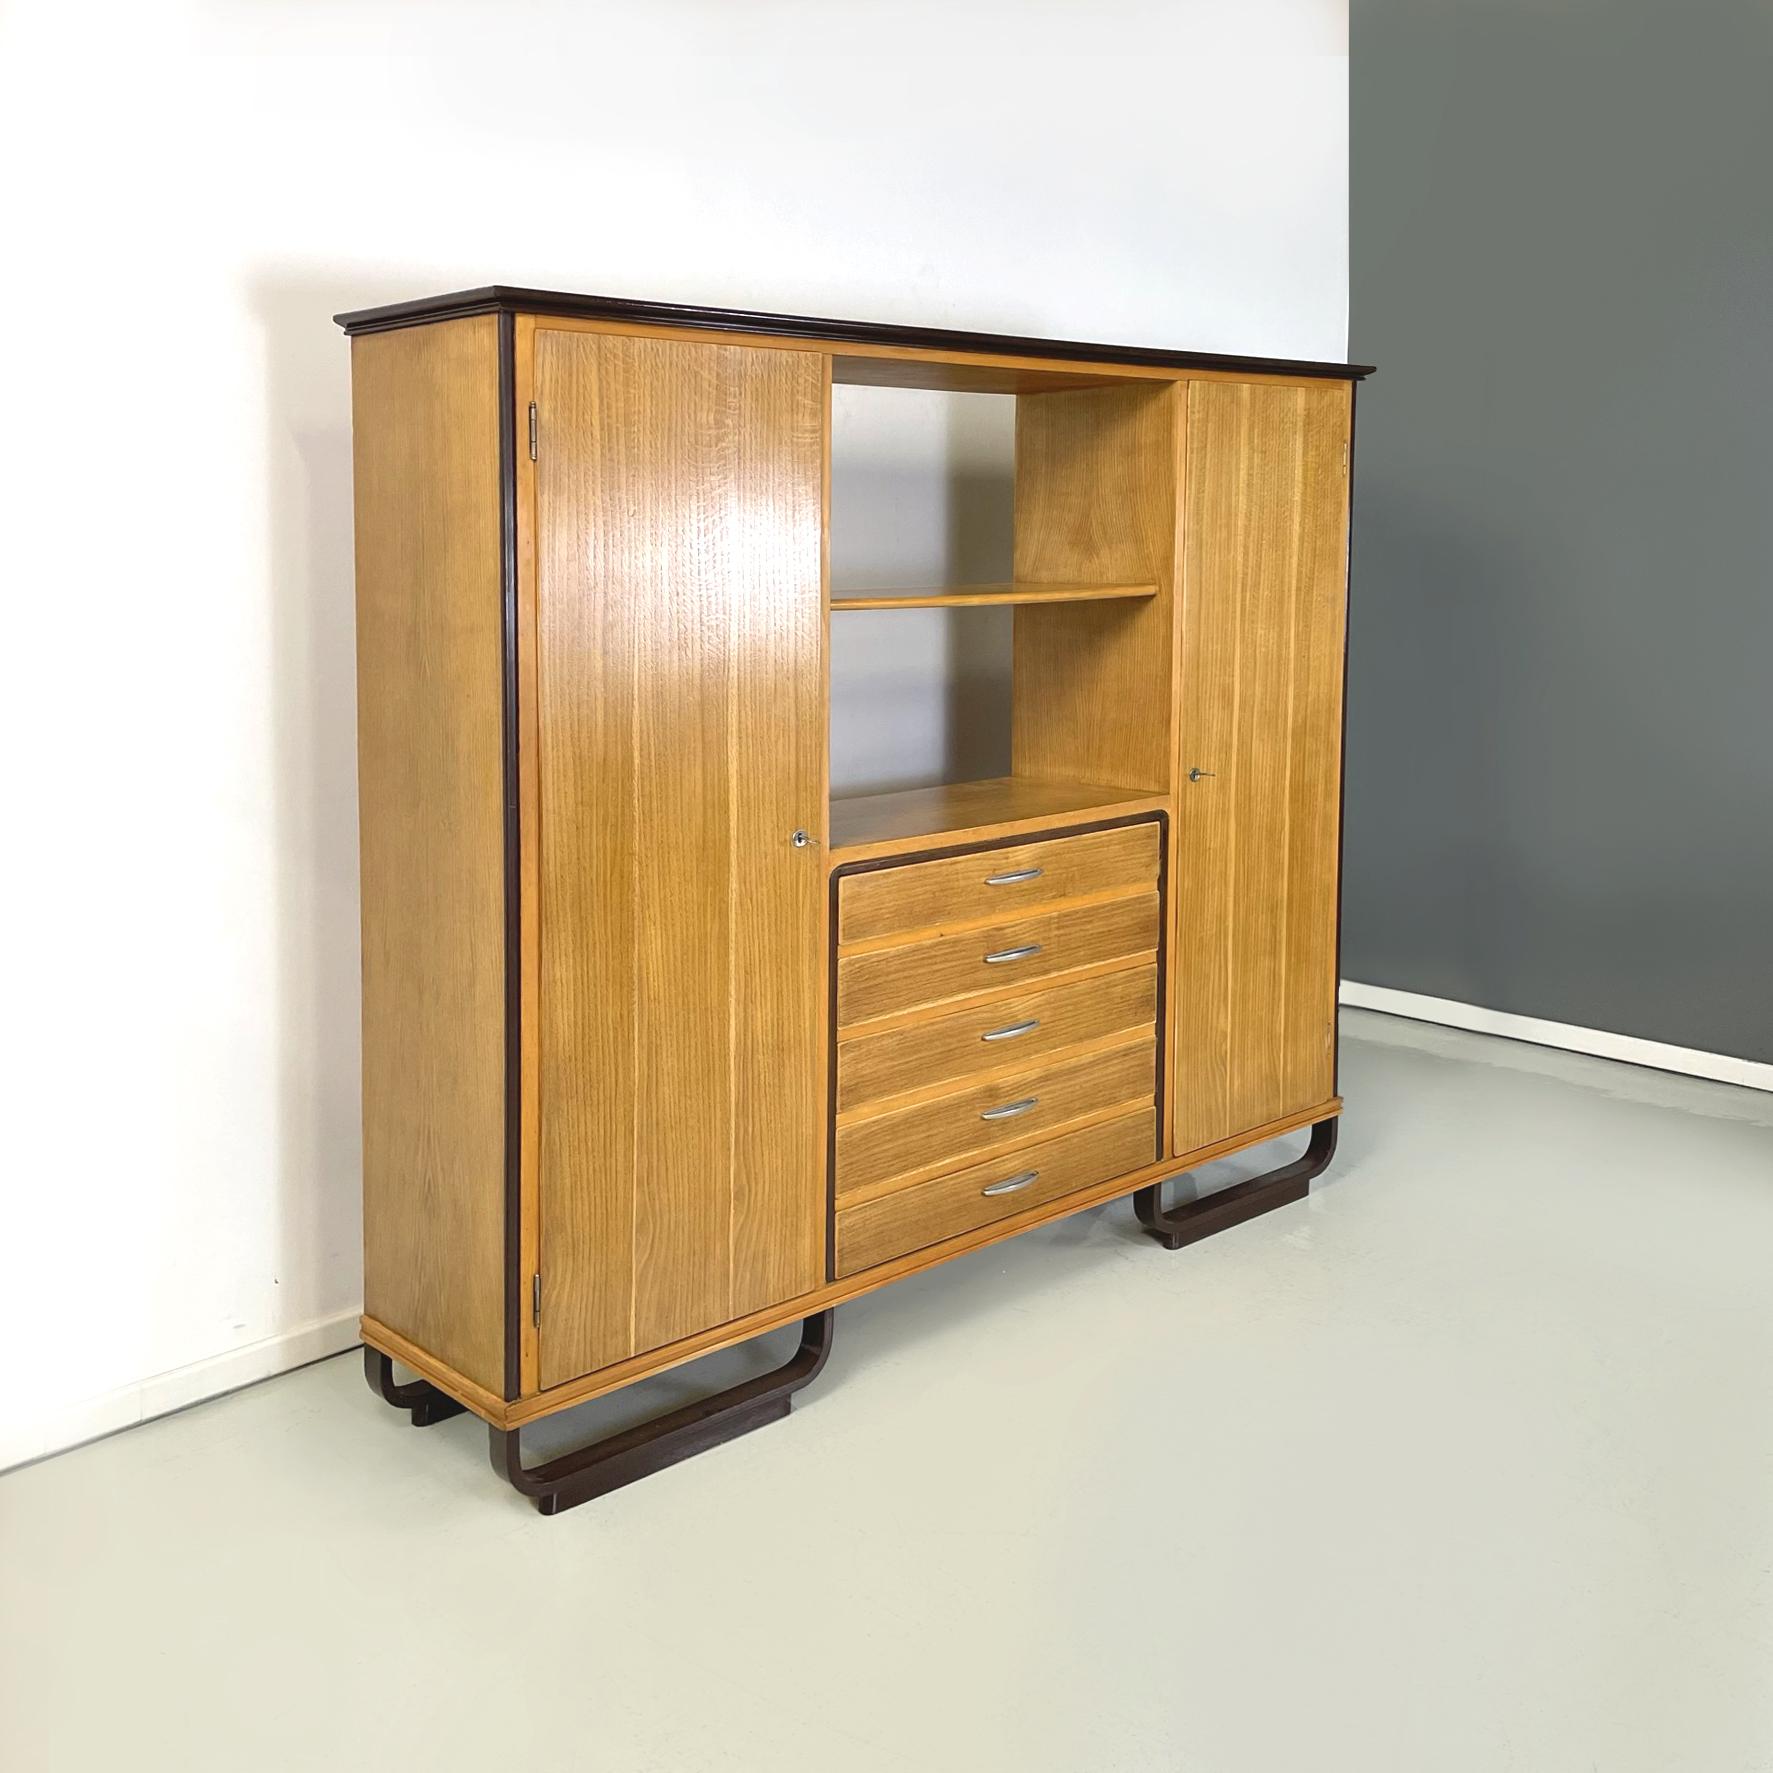 Art Deco Italian art deco Wood cabinet wardrobe by Giuseppe Pagano Pogatschnig, 1930s For Sale